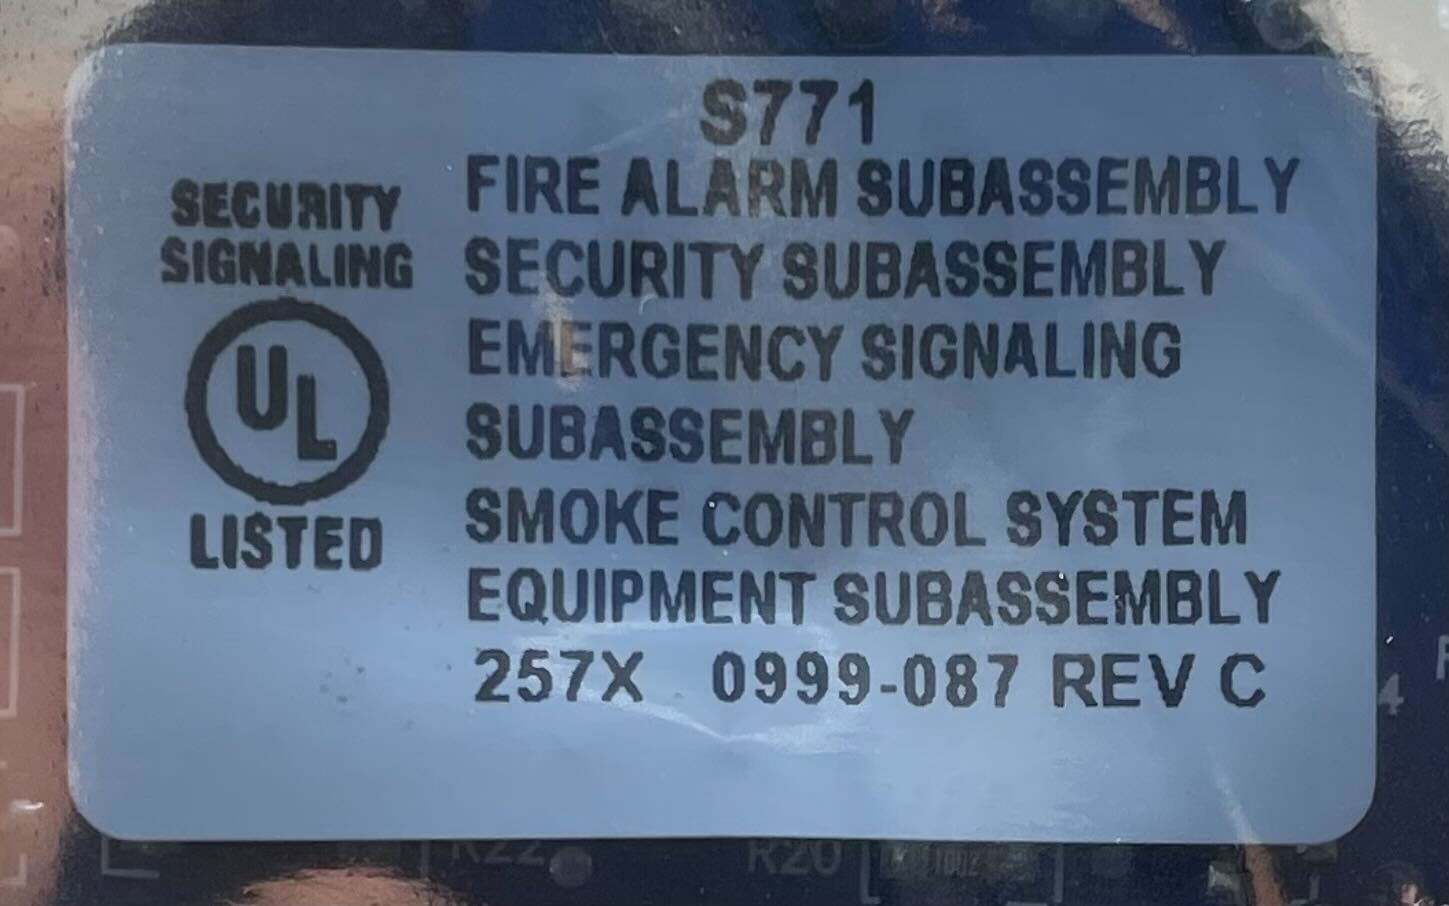 Simplex 4100-1245 - The Fire Alarm Supplier